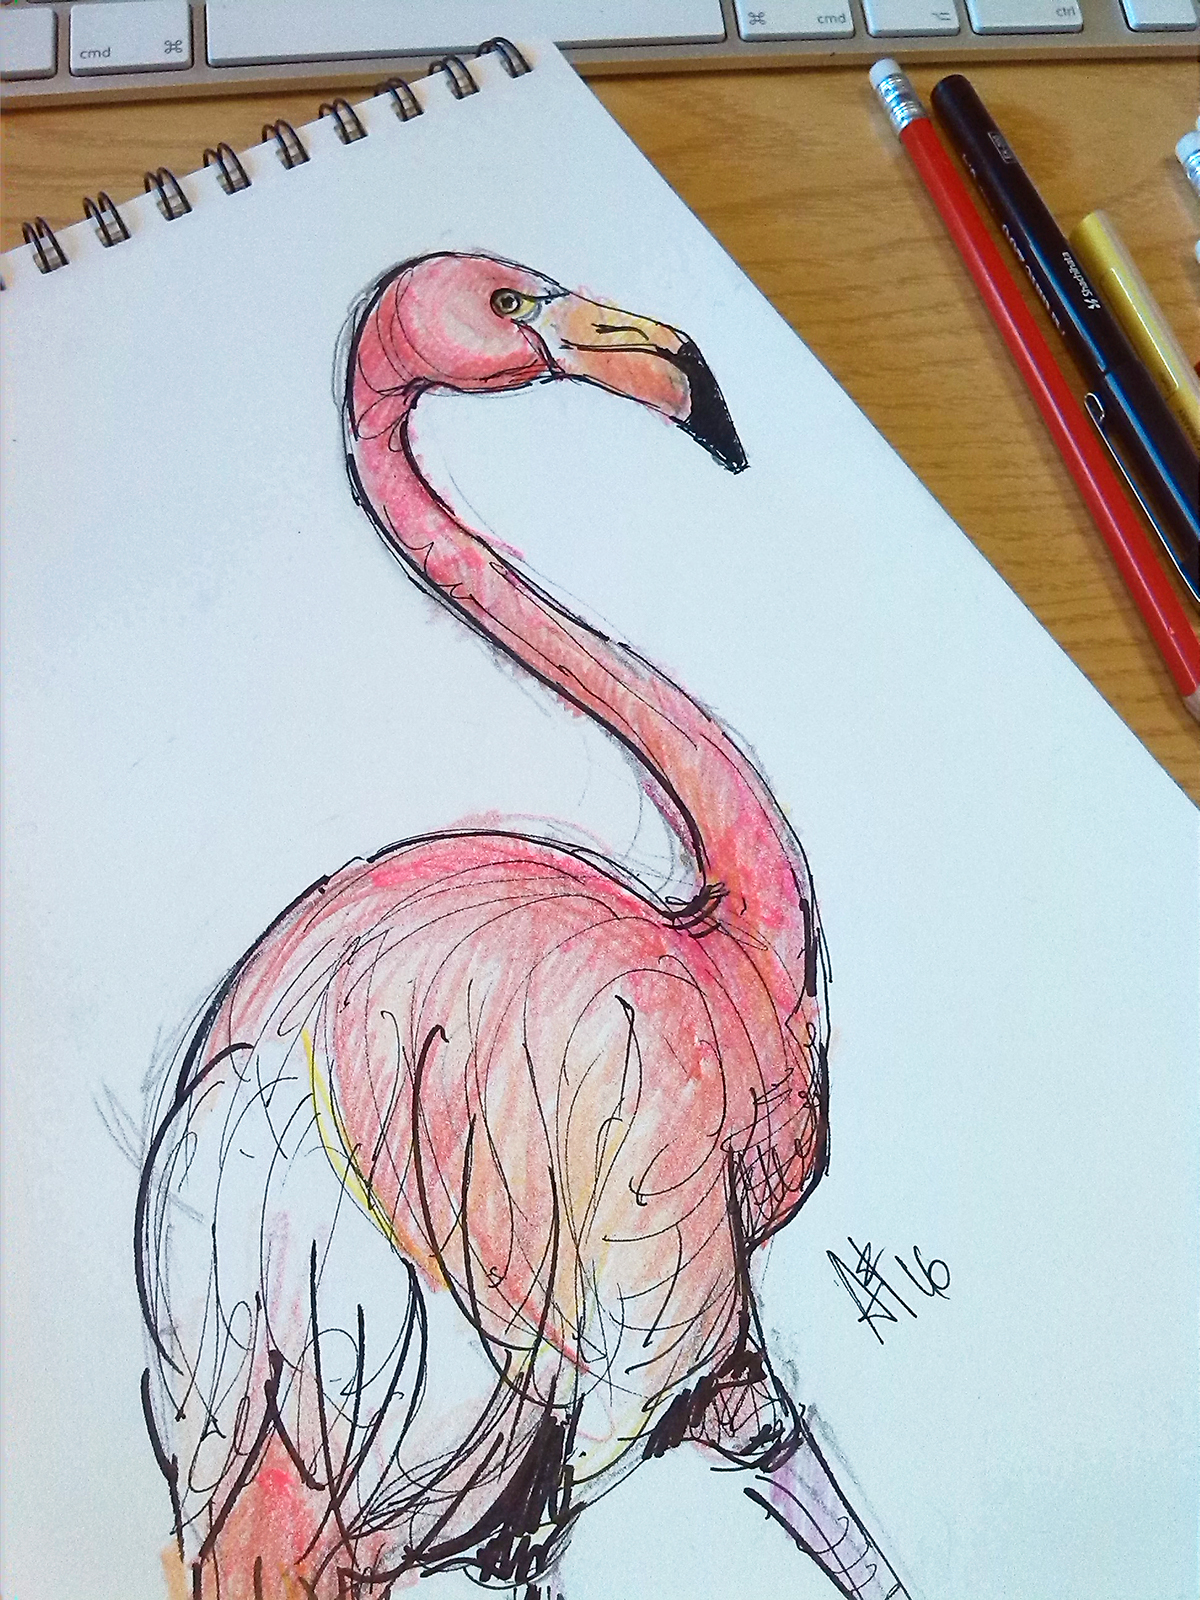 Clipart Vector of Flamingo sketch - Doodle style sketch of two flamingo  birds... csp10381852 - Search Clip Art… | Flamingo clip art, Clip art,  Black and white birds